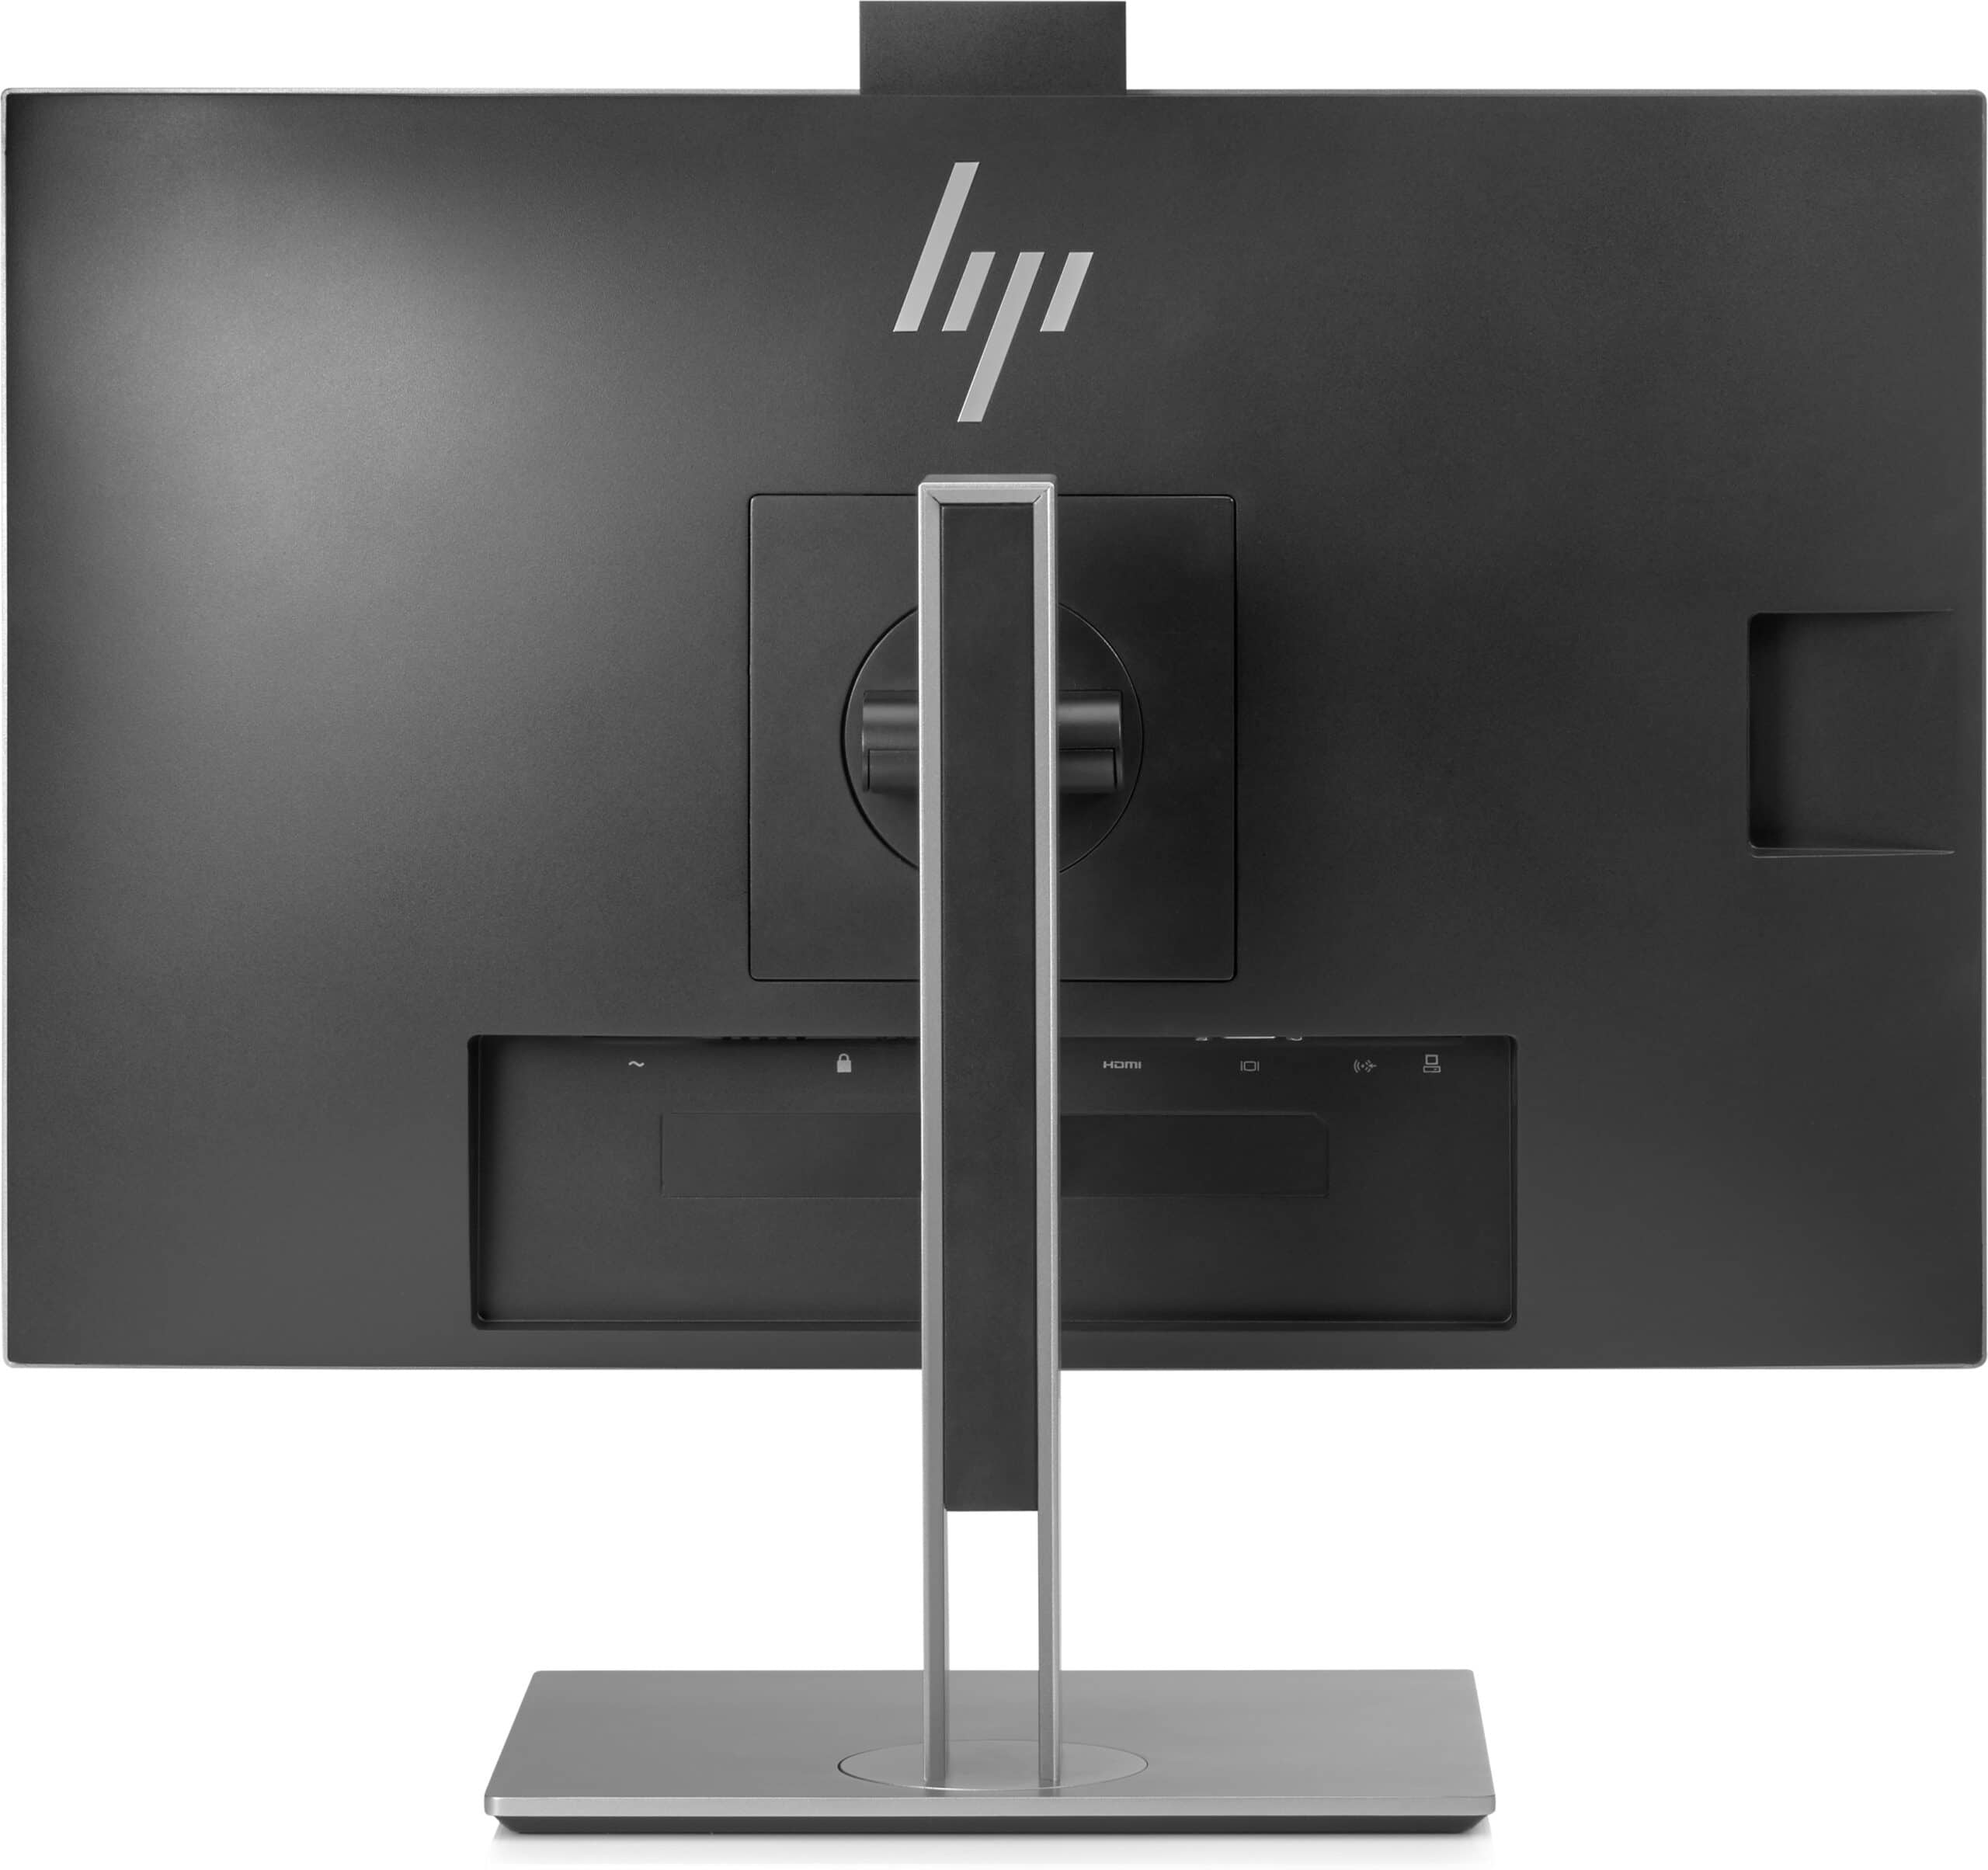 Postazione HP Z2 Mini G4 + HP EliteDisplay E243m